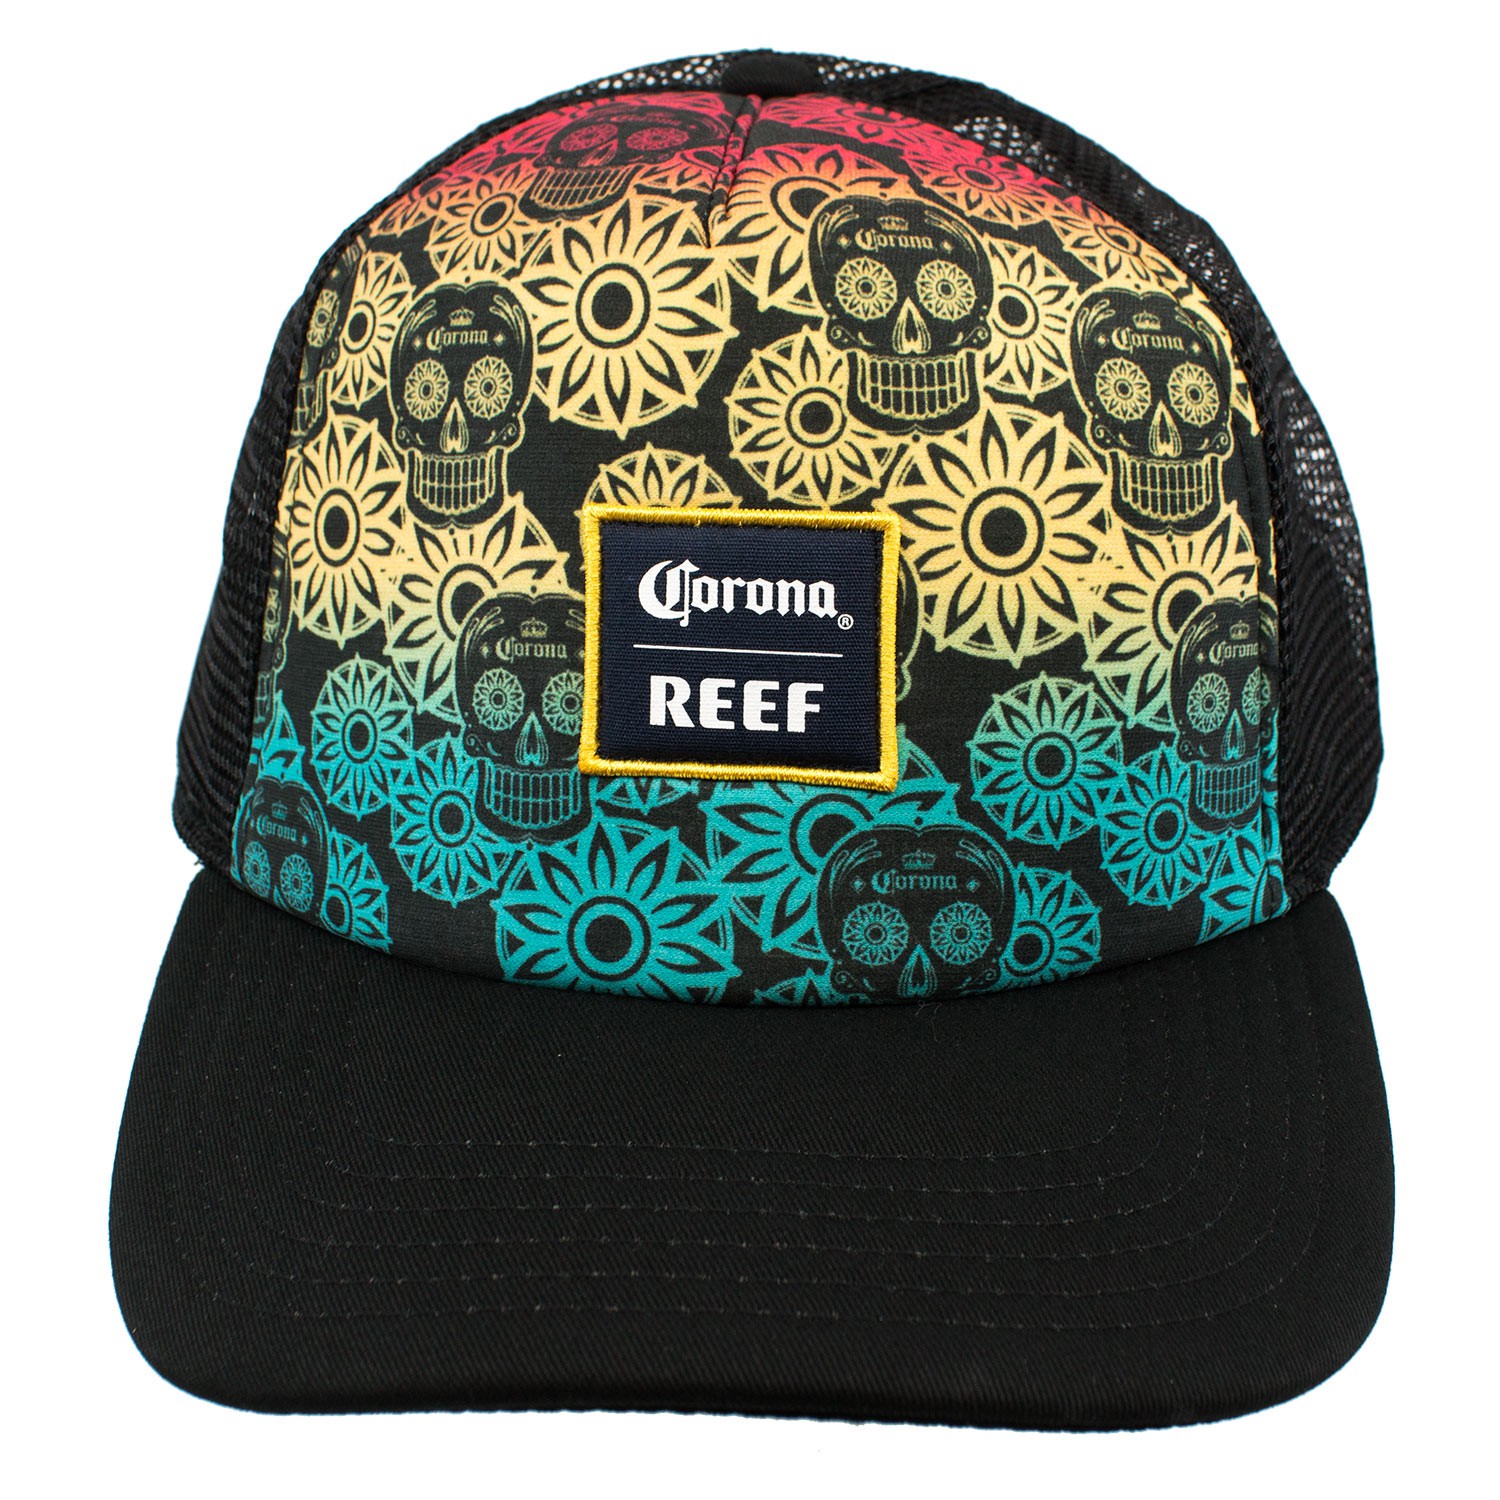 Corona Reef Rainbow Sugar Skull Trucker Hat